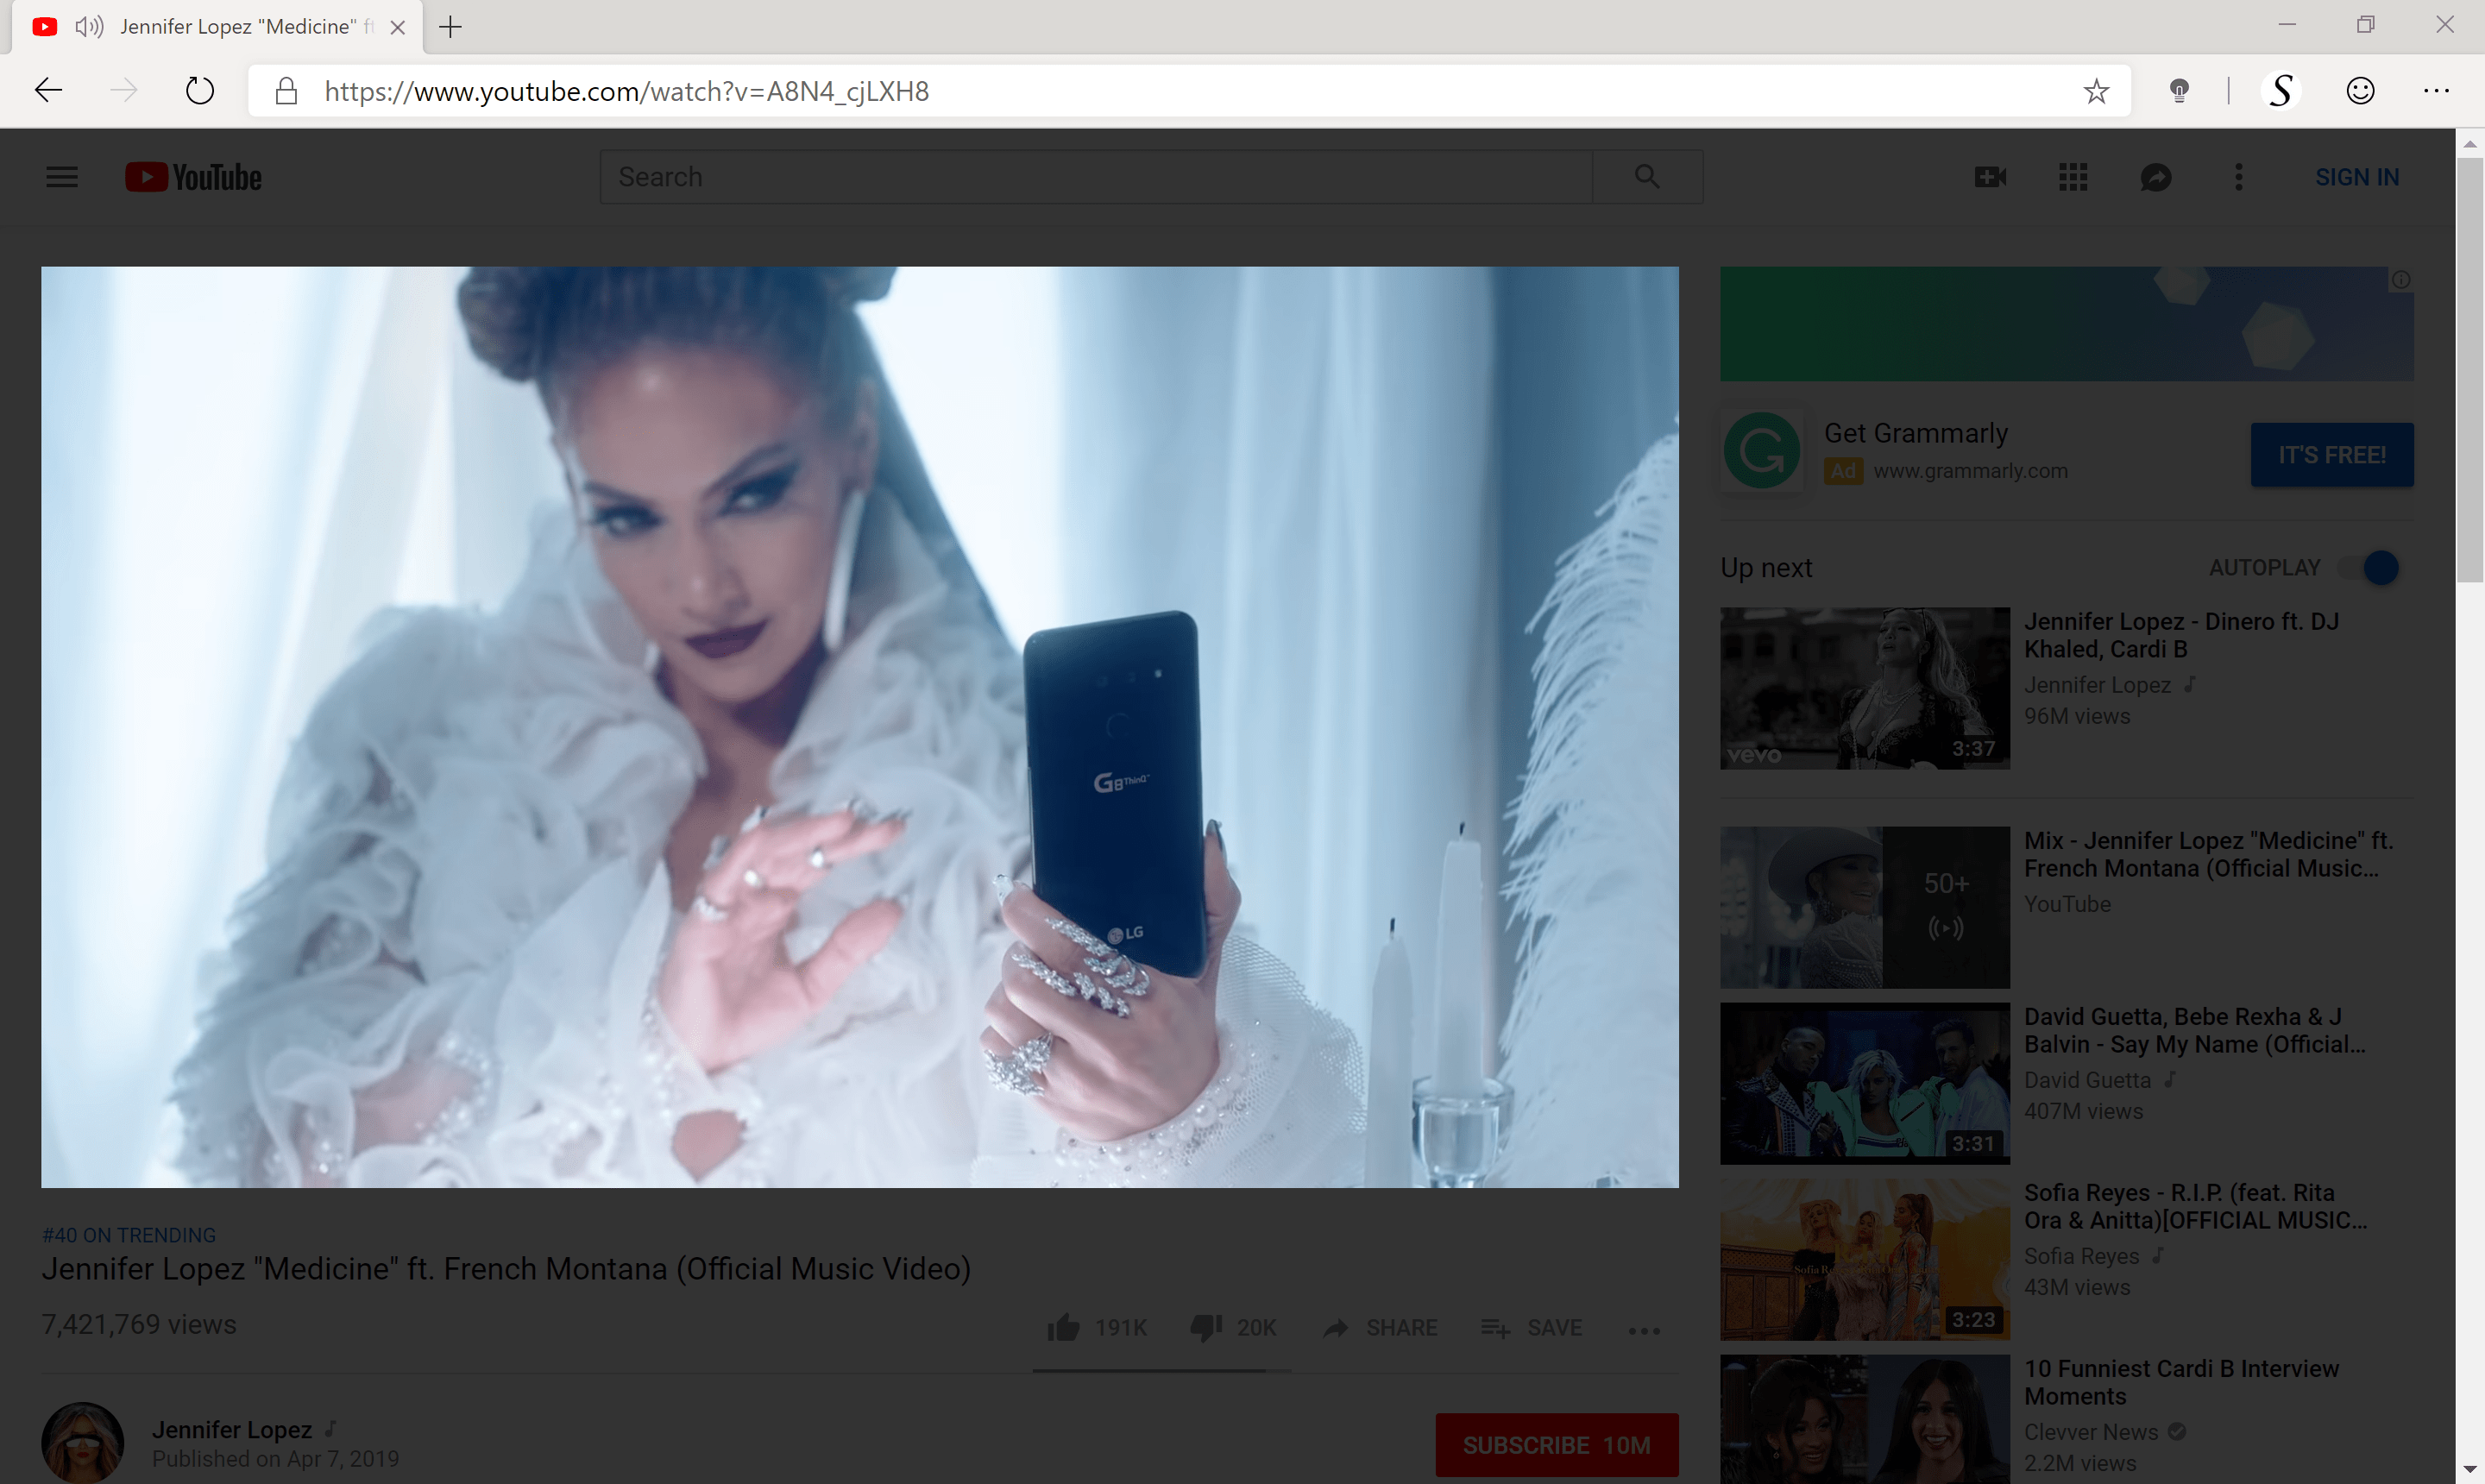 Turn Off the Lights Microsoft Edge extension Jennifer Lopez YouTube video